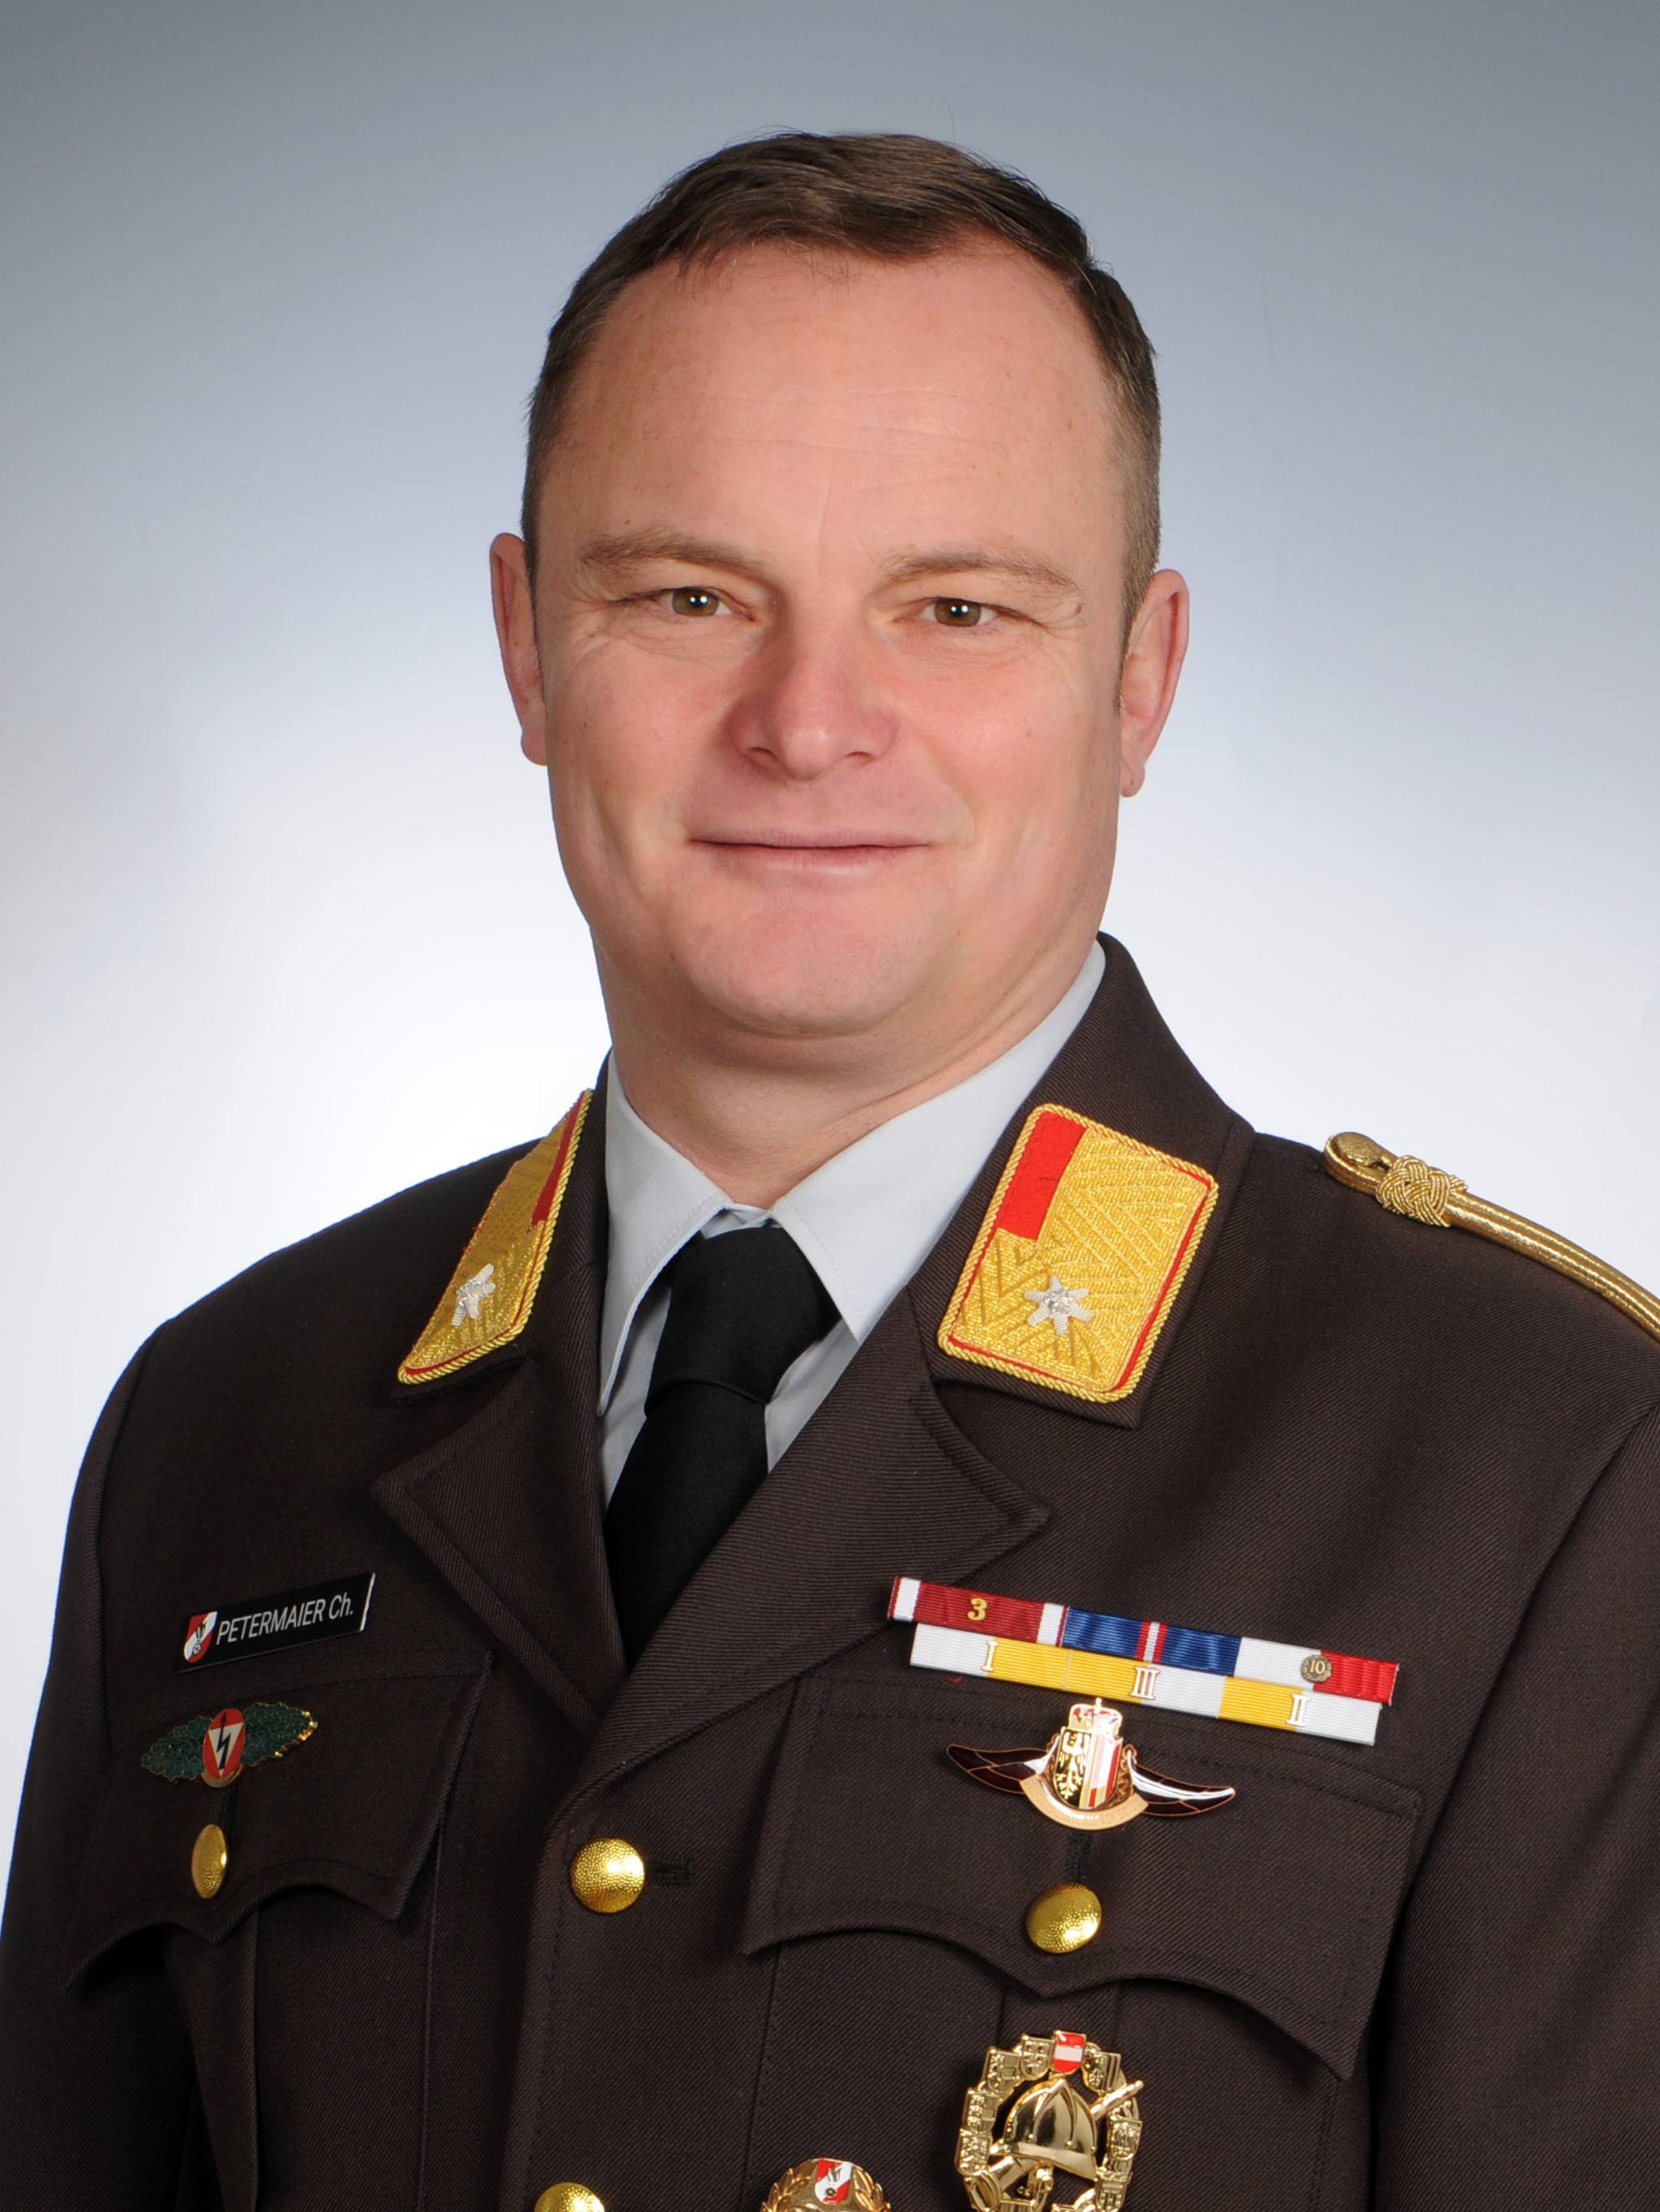 Christoph Josef Petermaier